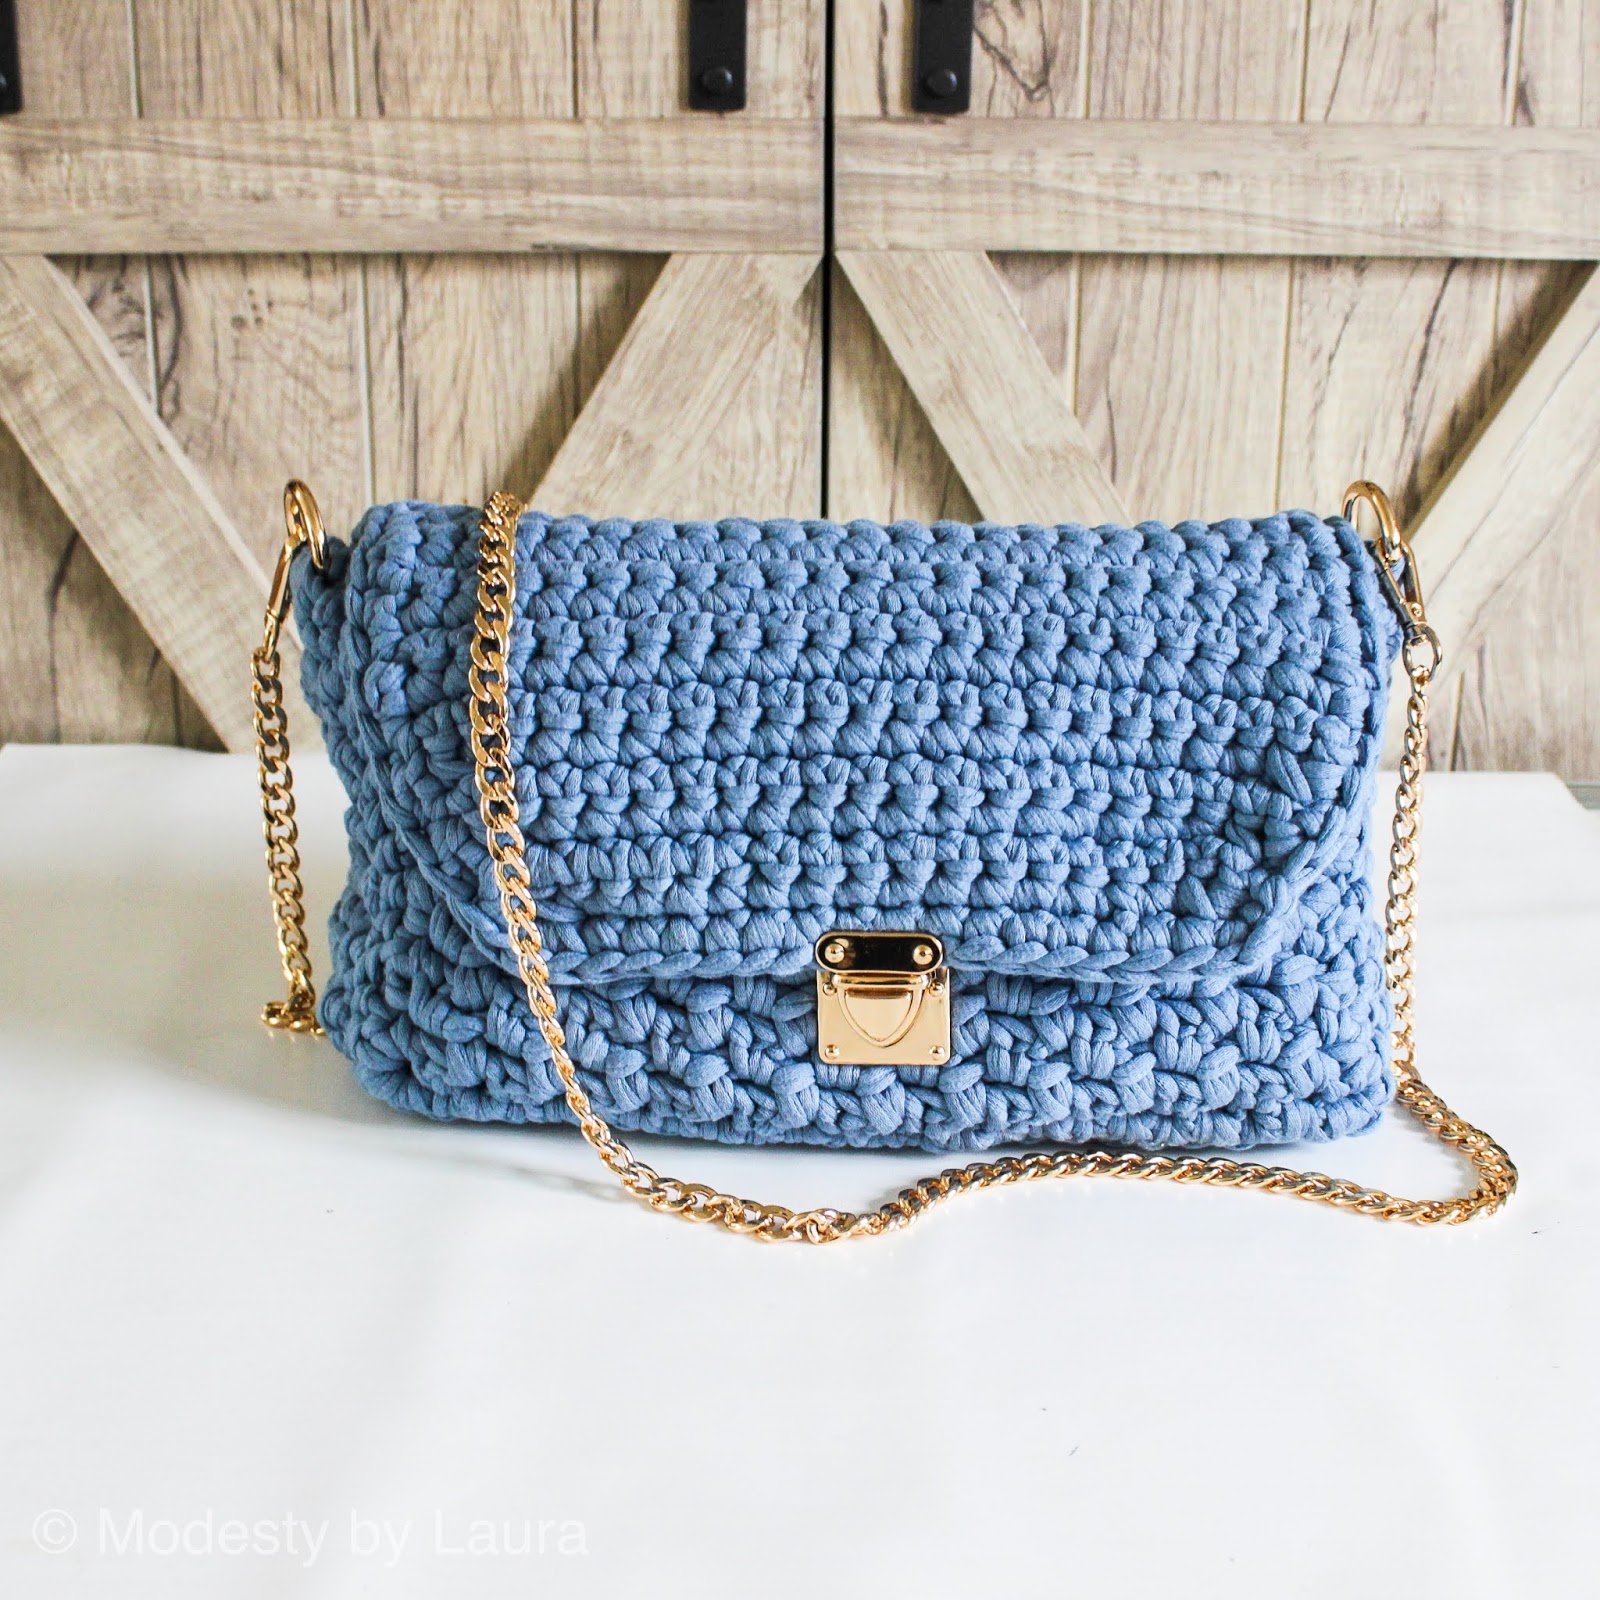 Simple Crochet Tote Bag Tutorial - YouTube